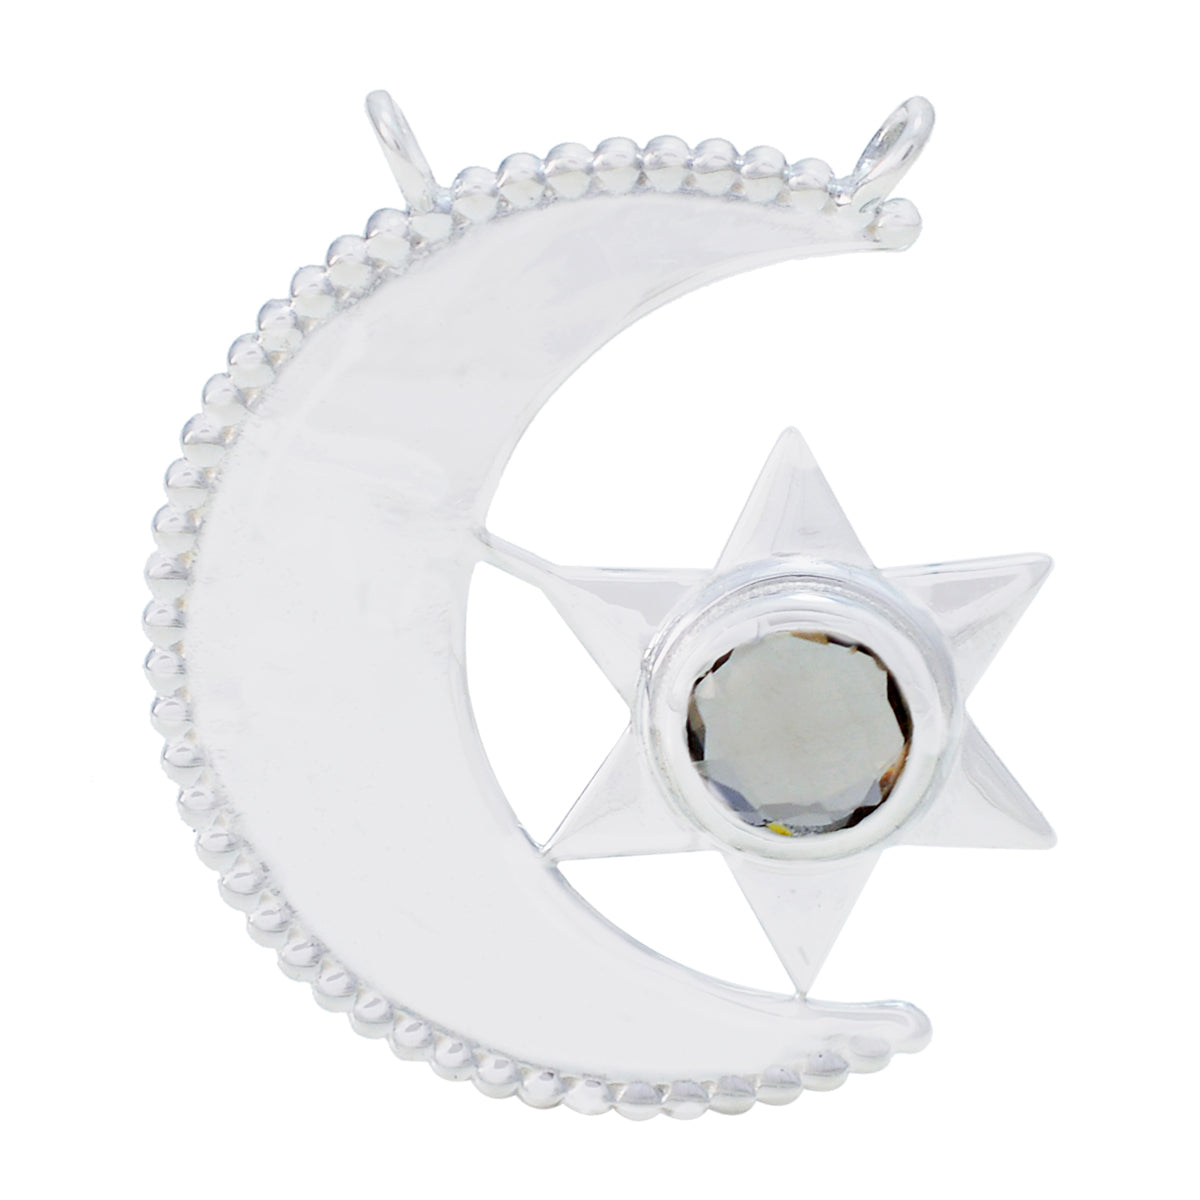 Riyo Natural Gemstone Round checker Brown smoky quartz Solid Silver Pendant gift for good Friday